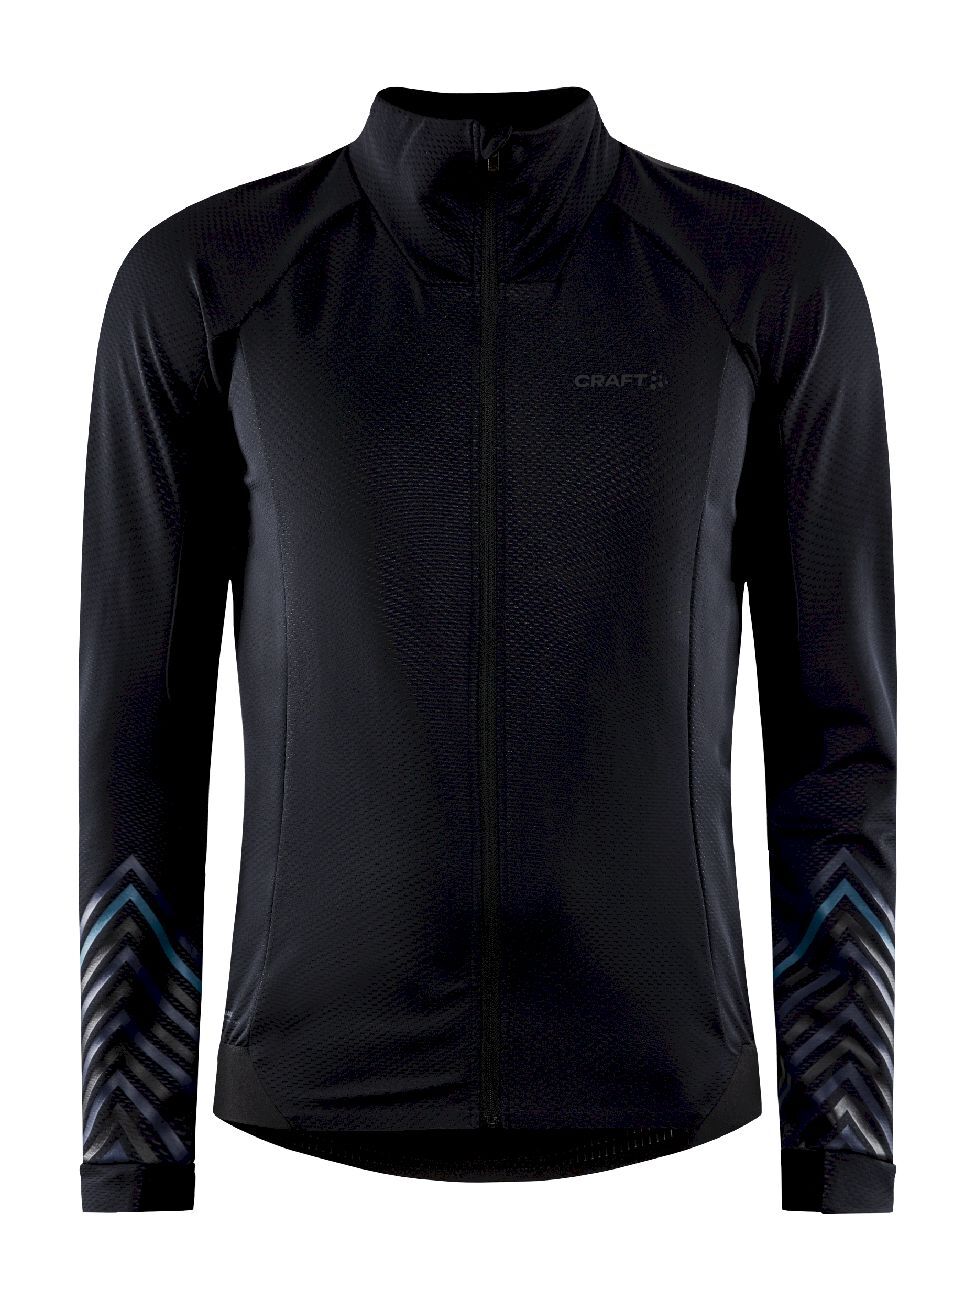 Craft Adv Bike Subz Jacket - Cycling windproof jacket - Men's